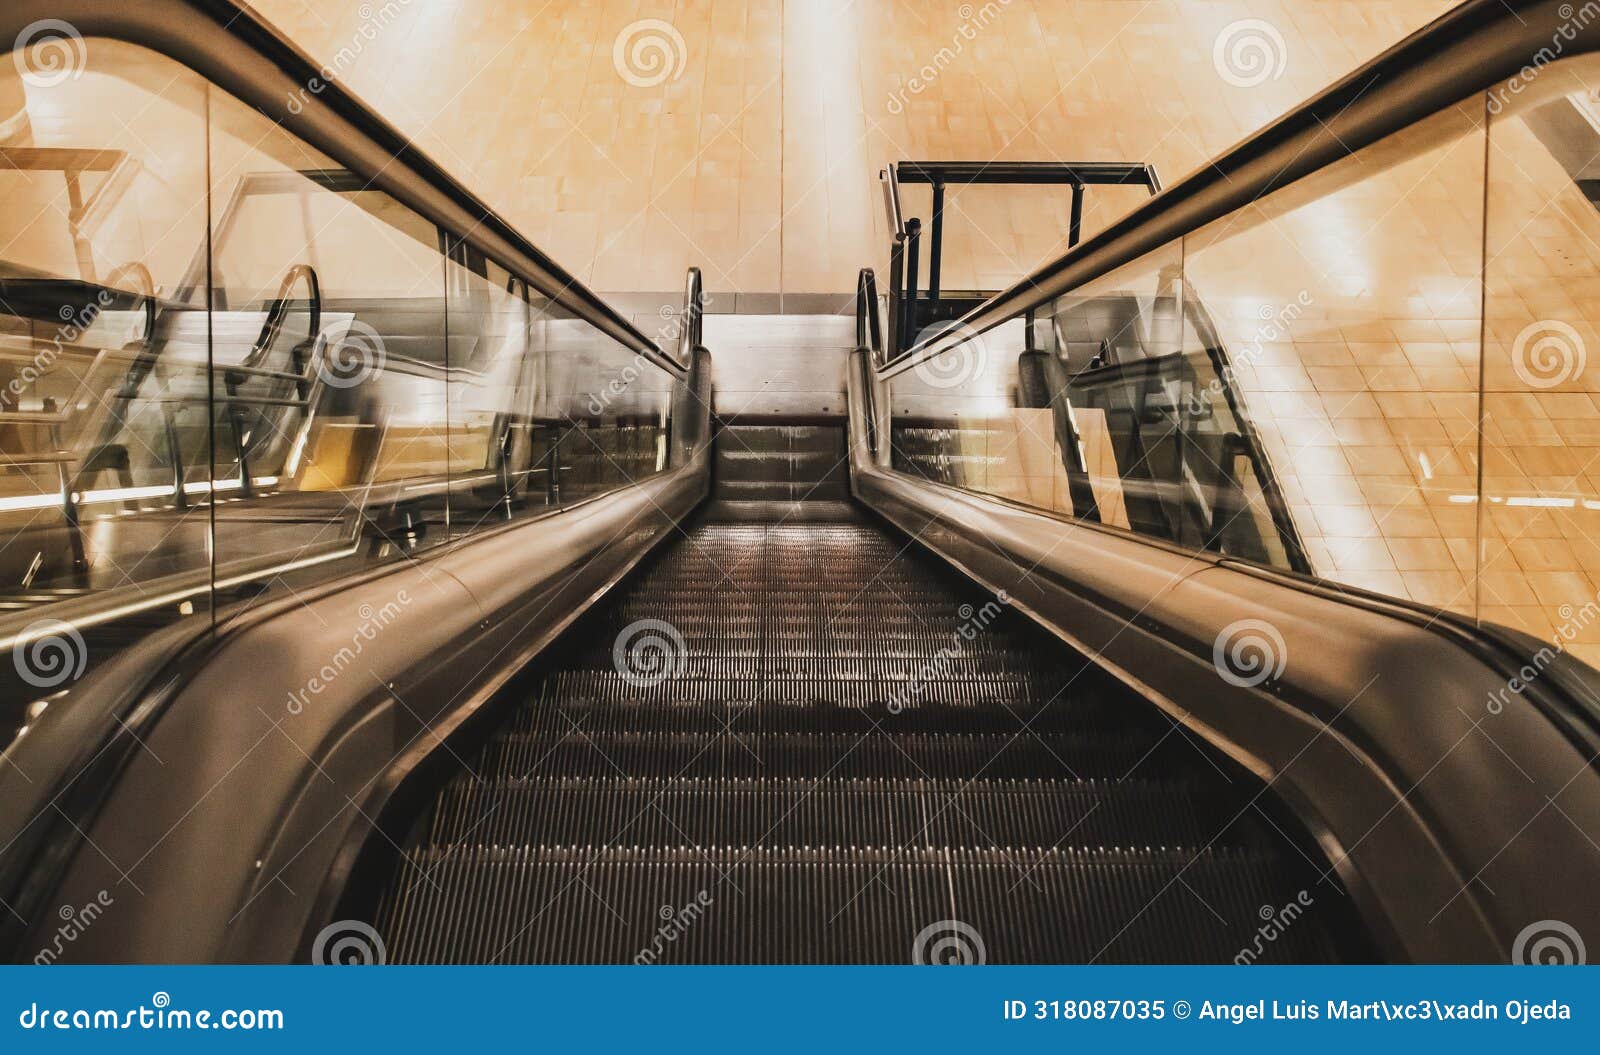 escalators at the chamartin metro station in madrid, spain.